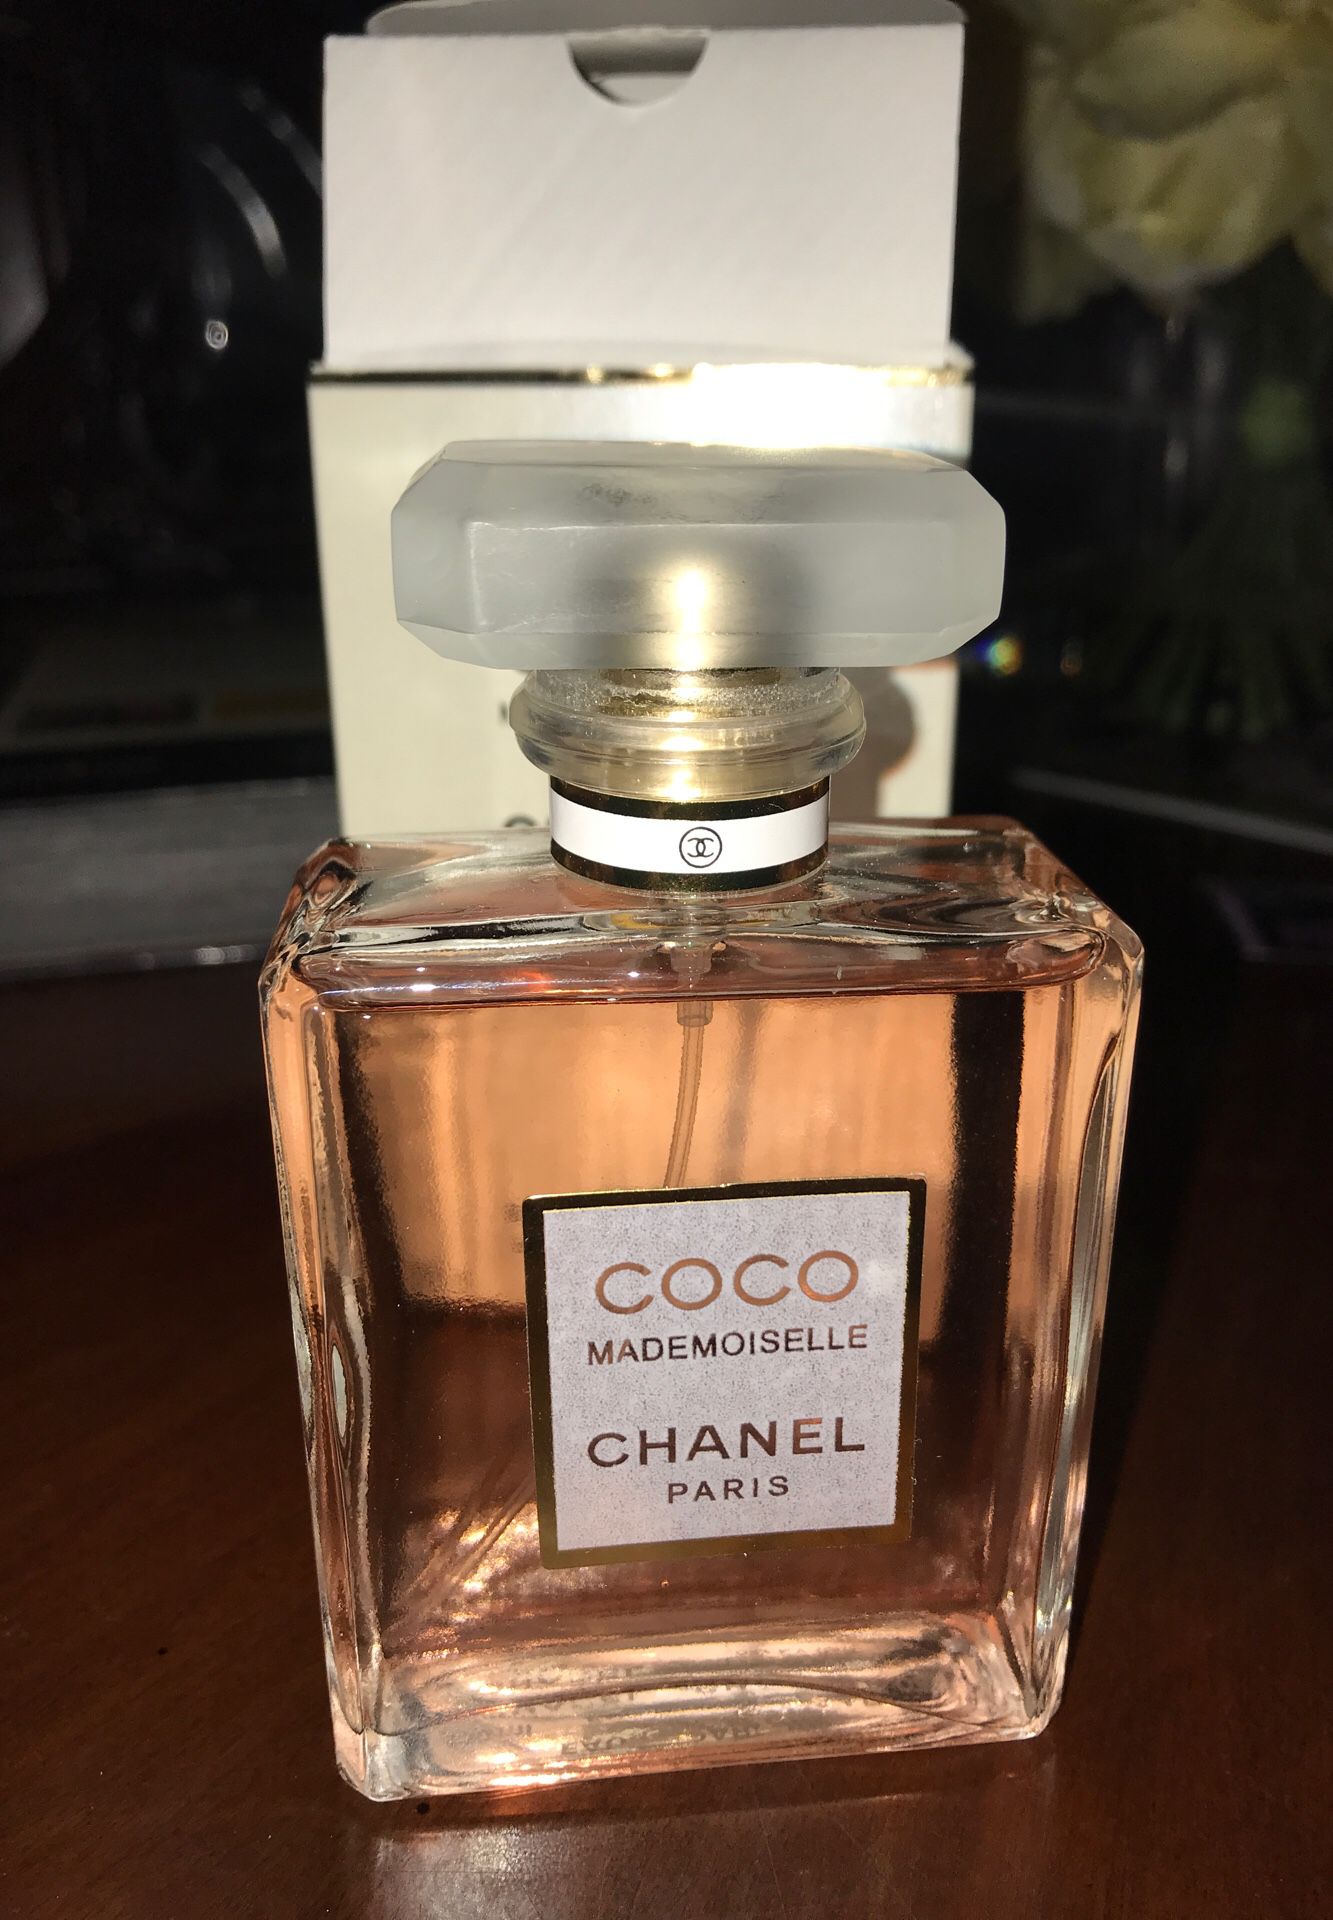 COCO Chanel Paris perfume